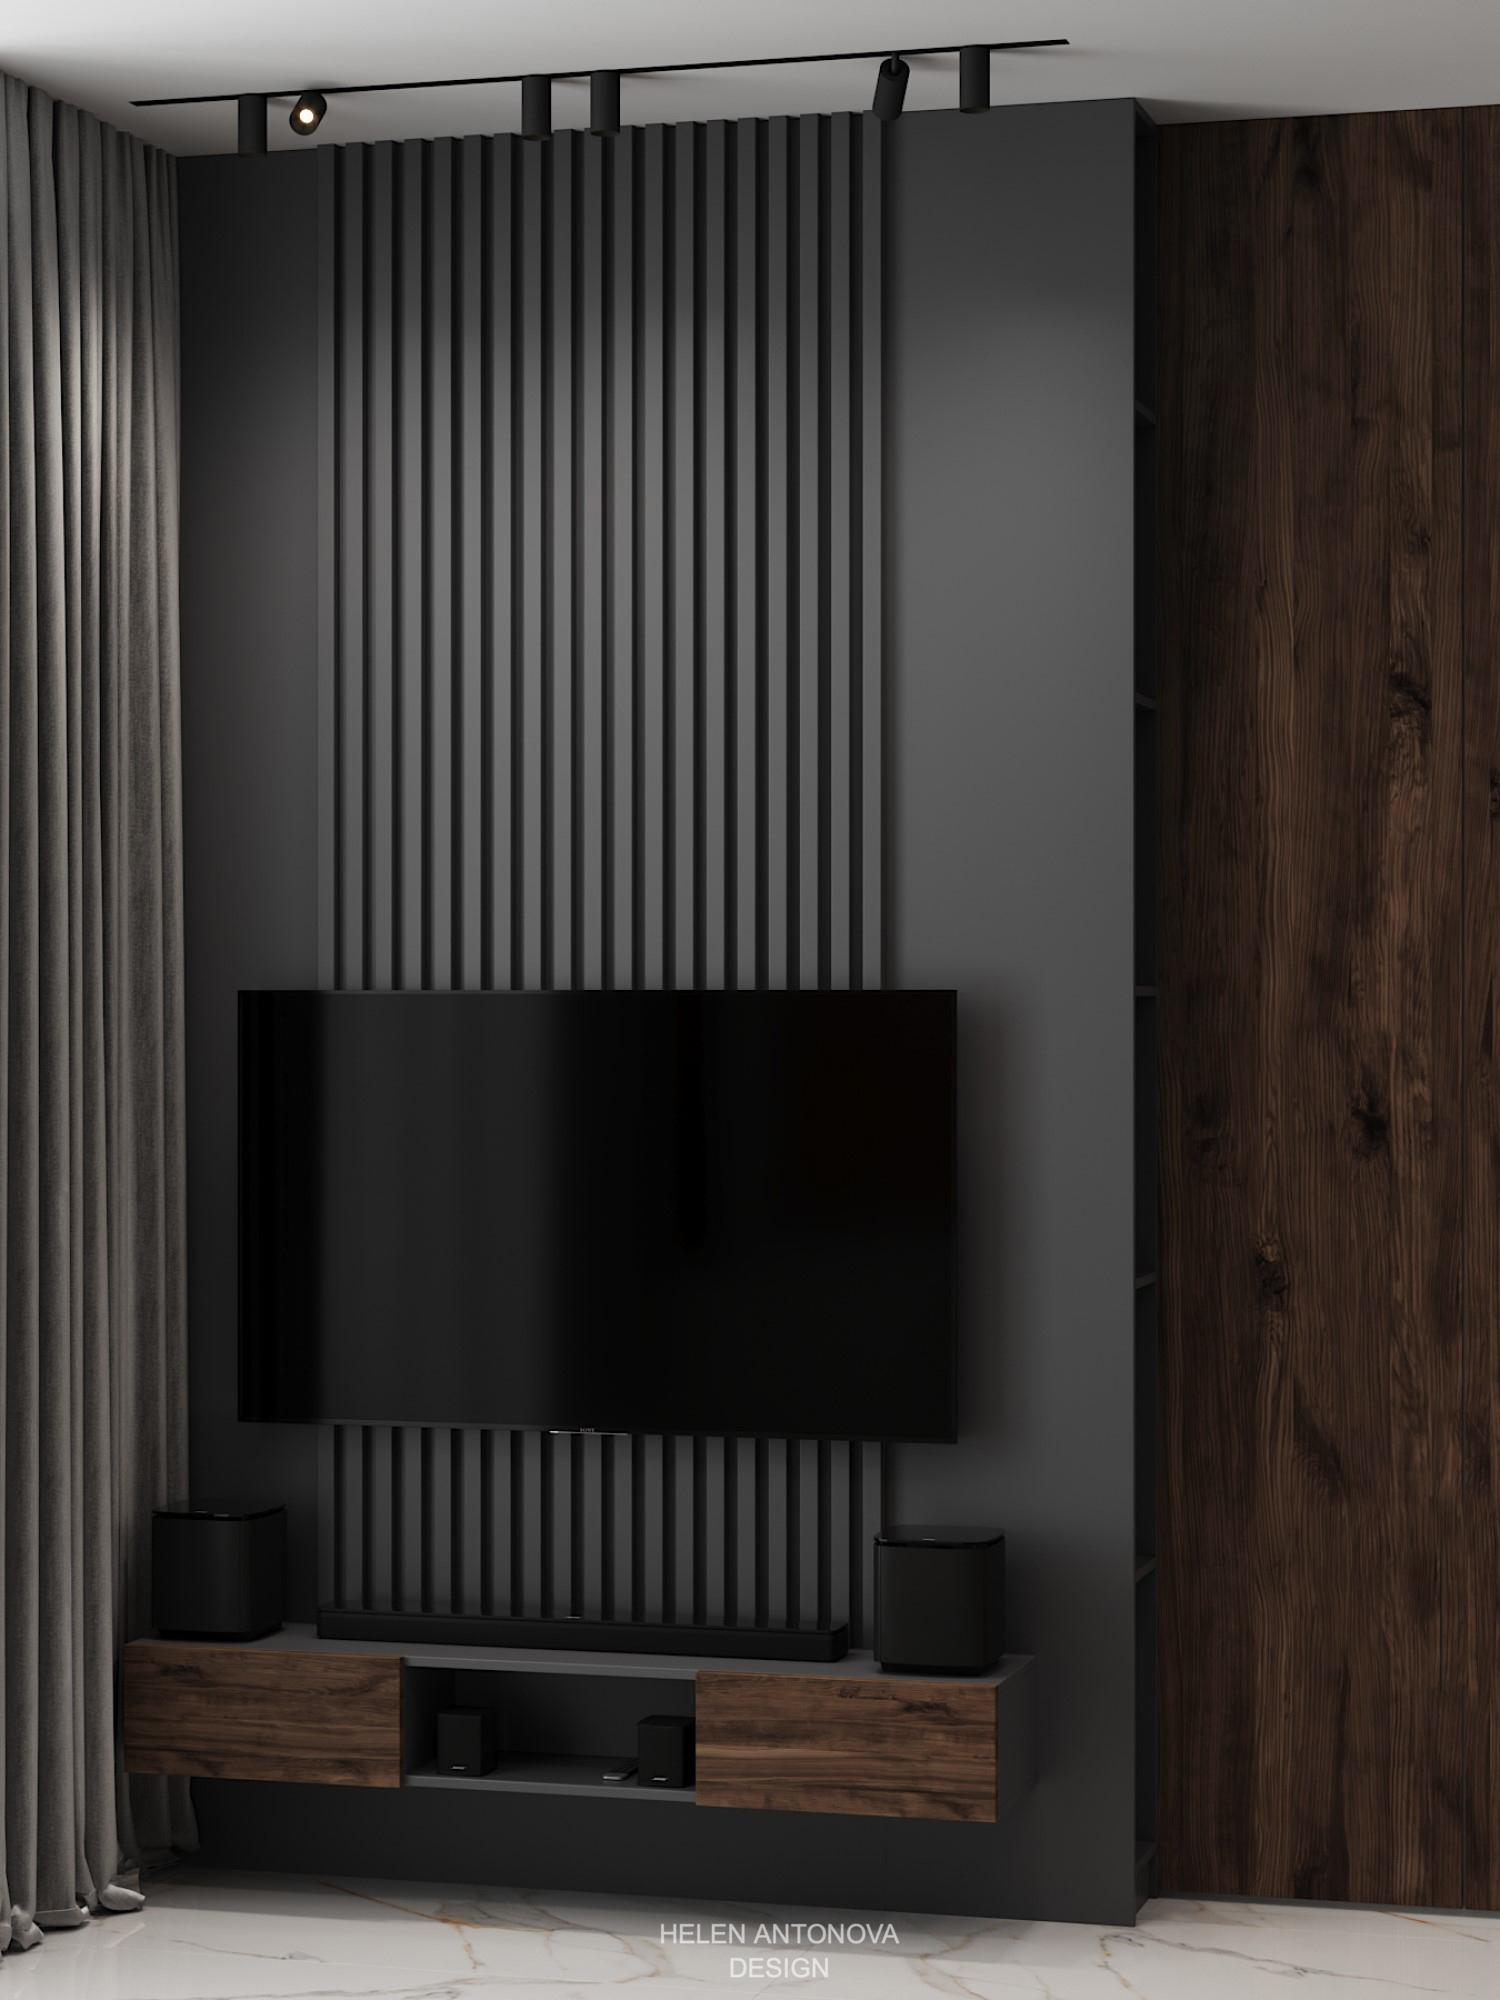 Интерьер с панно за телевизором, стеной с телевизором, телевизором на рейках, телевизором на стене и керамогранитом на стену с телевизором